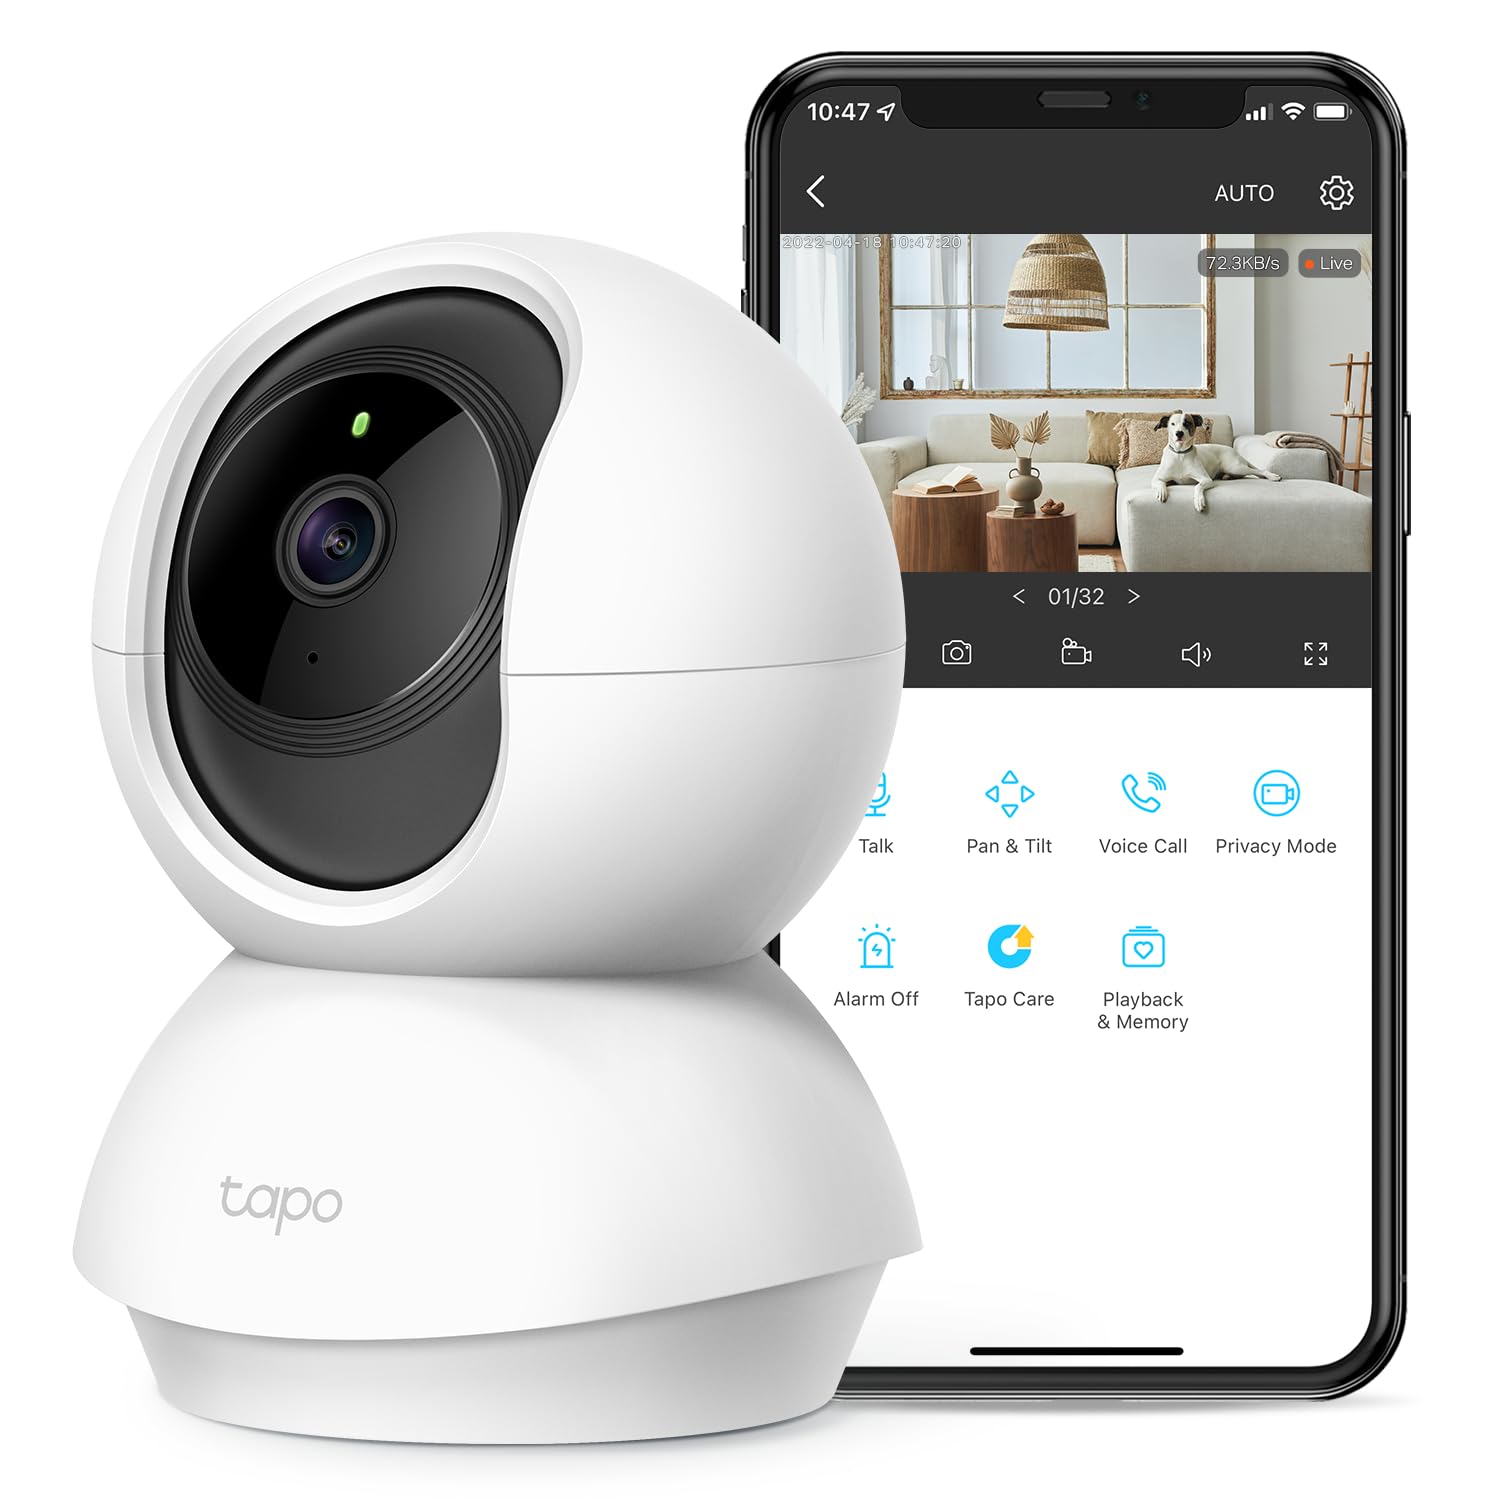 TP-Link Tapo C500 Outdoor Pan/Tilt Home Security WiFi Smart Camera